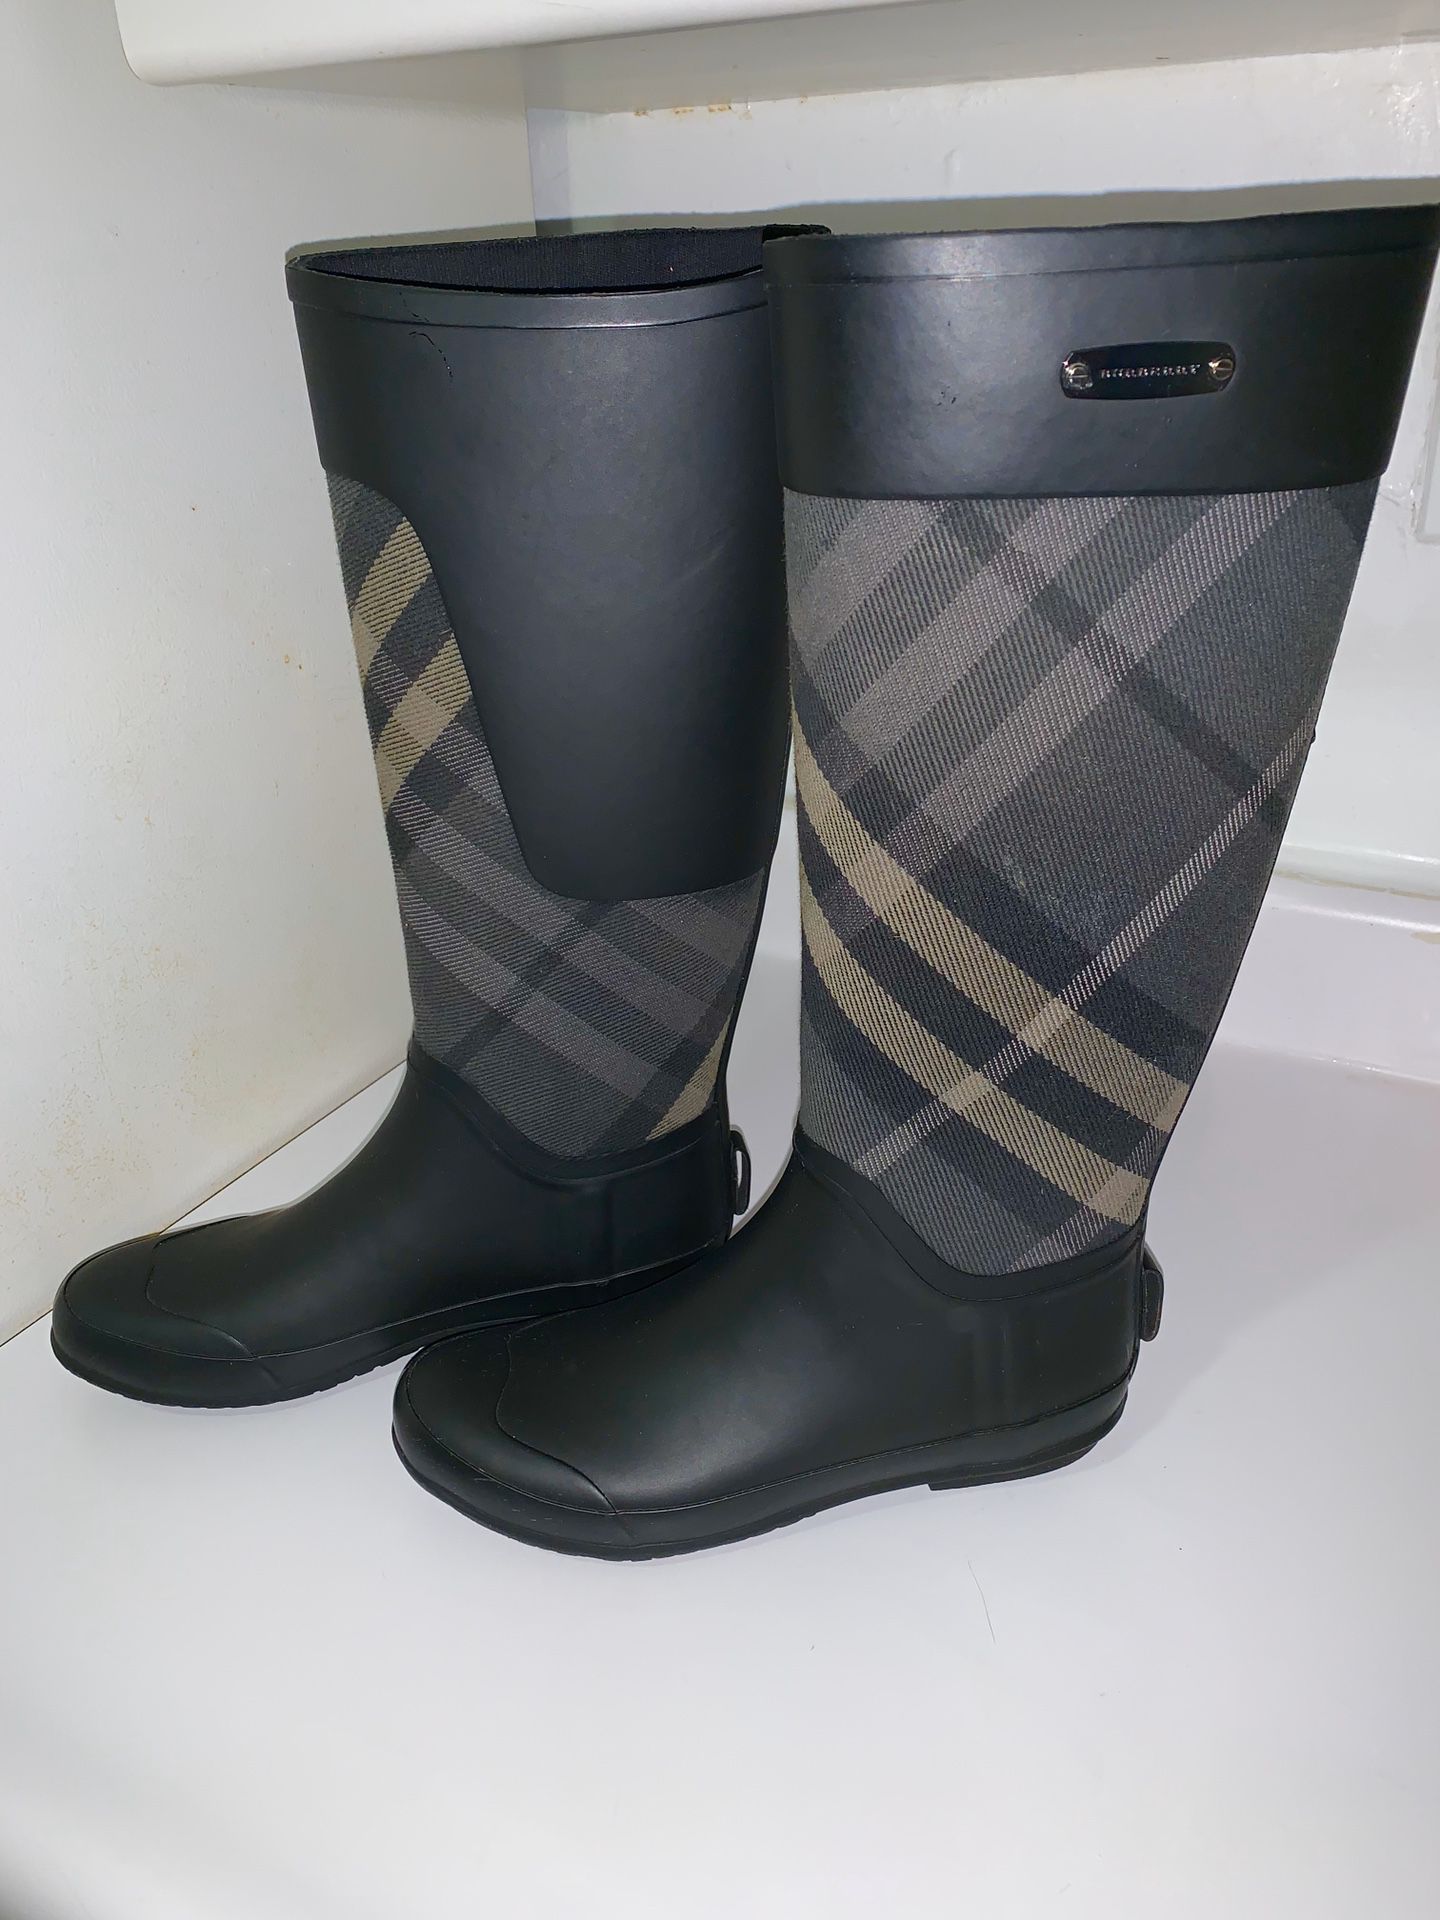 Burberry rain 🌧 boots size 38 / 8